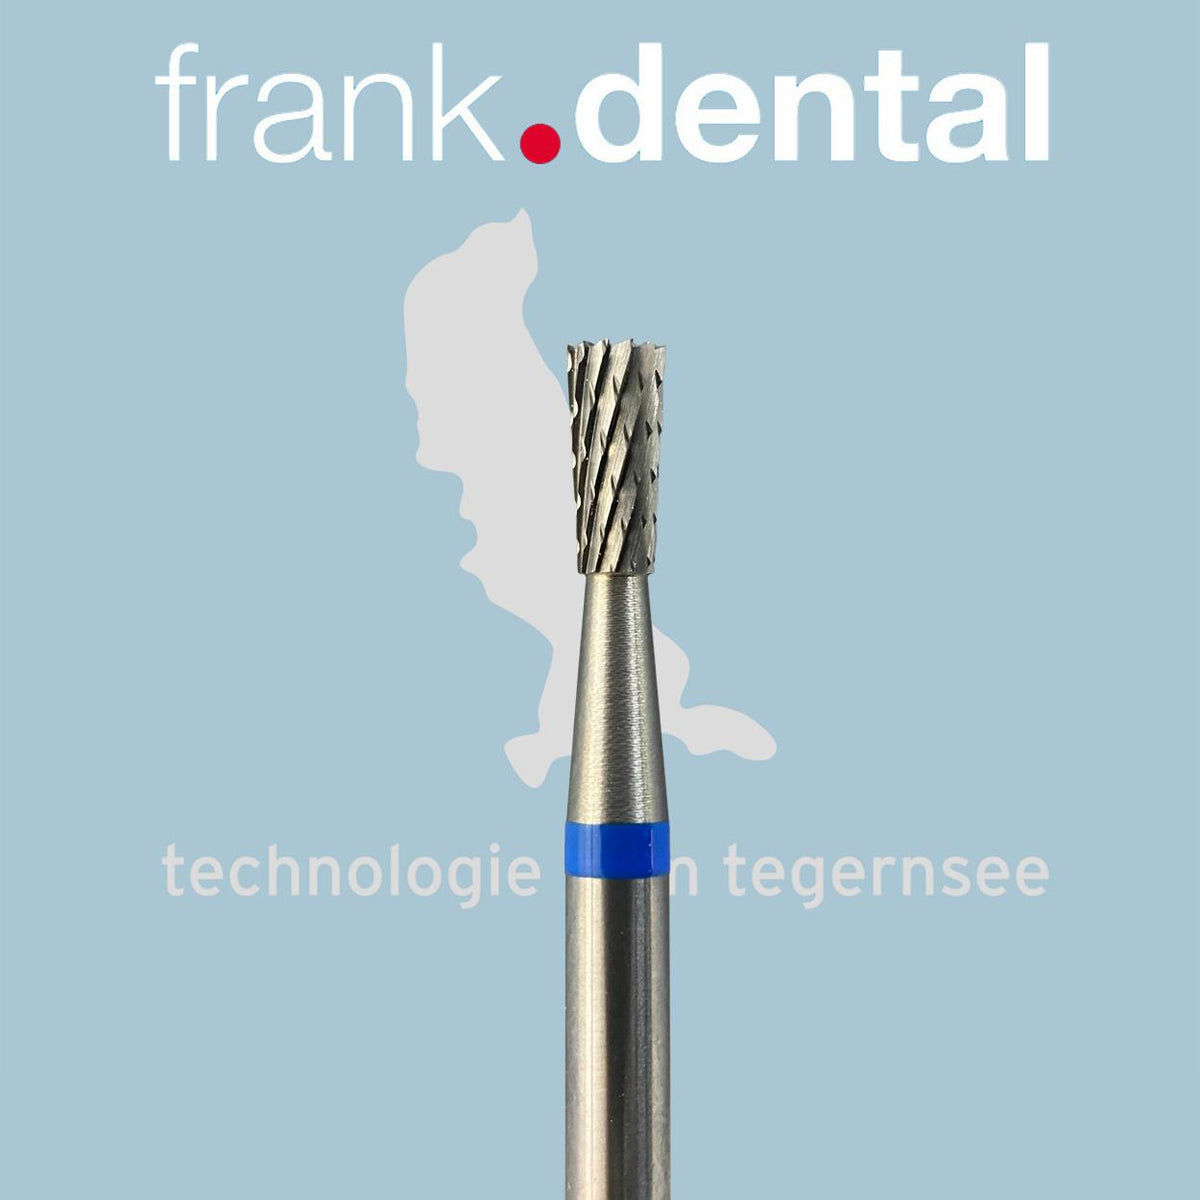 DentrealStore - Frank Dental Tungsten Carpide Monster Hard Burs -137K